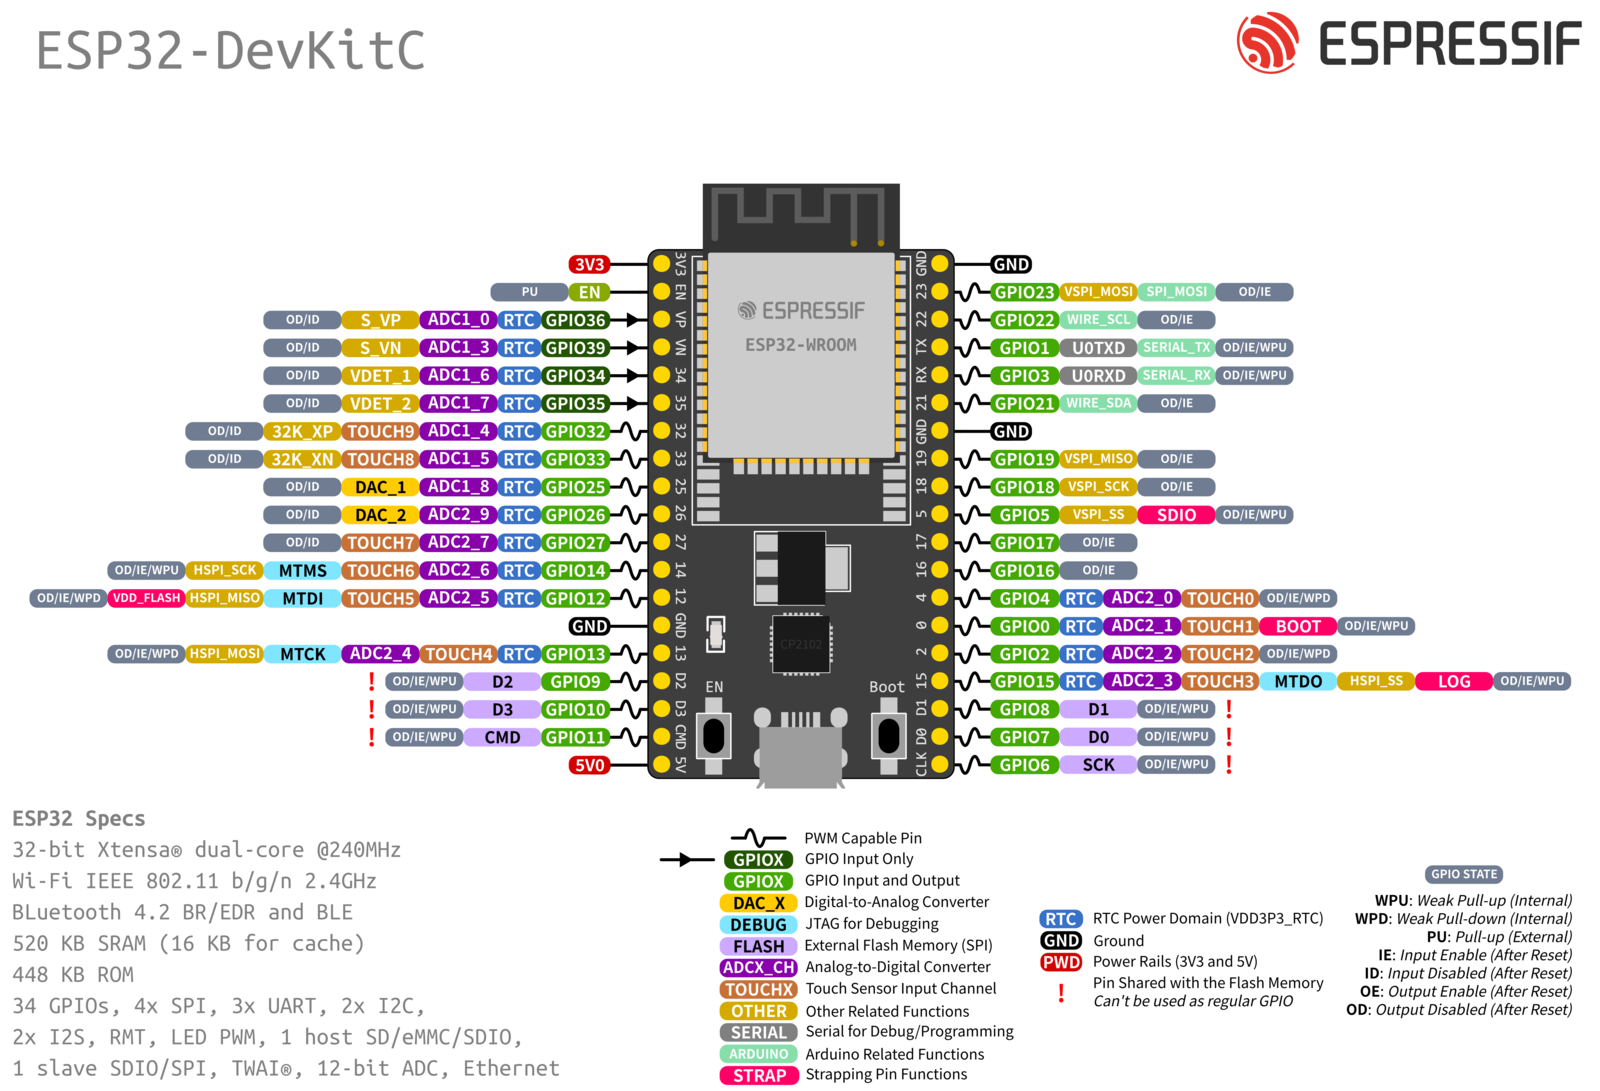 ESP32-DEVKITC-32E Espressif Systems, Development Boards, Kits, Programmers